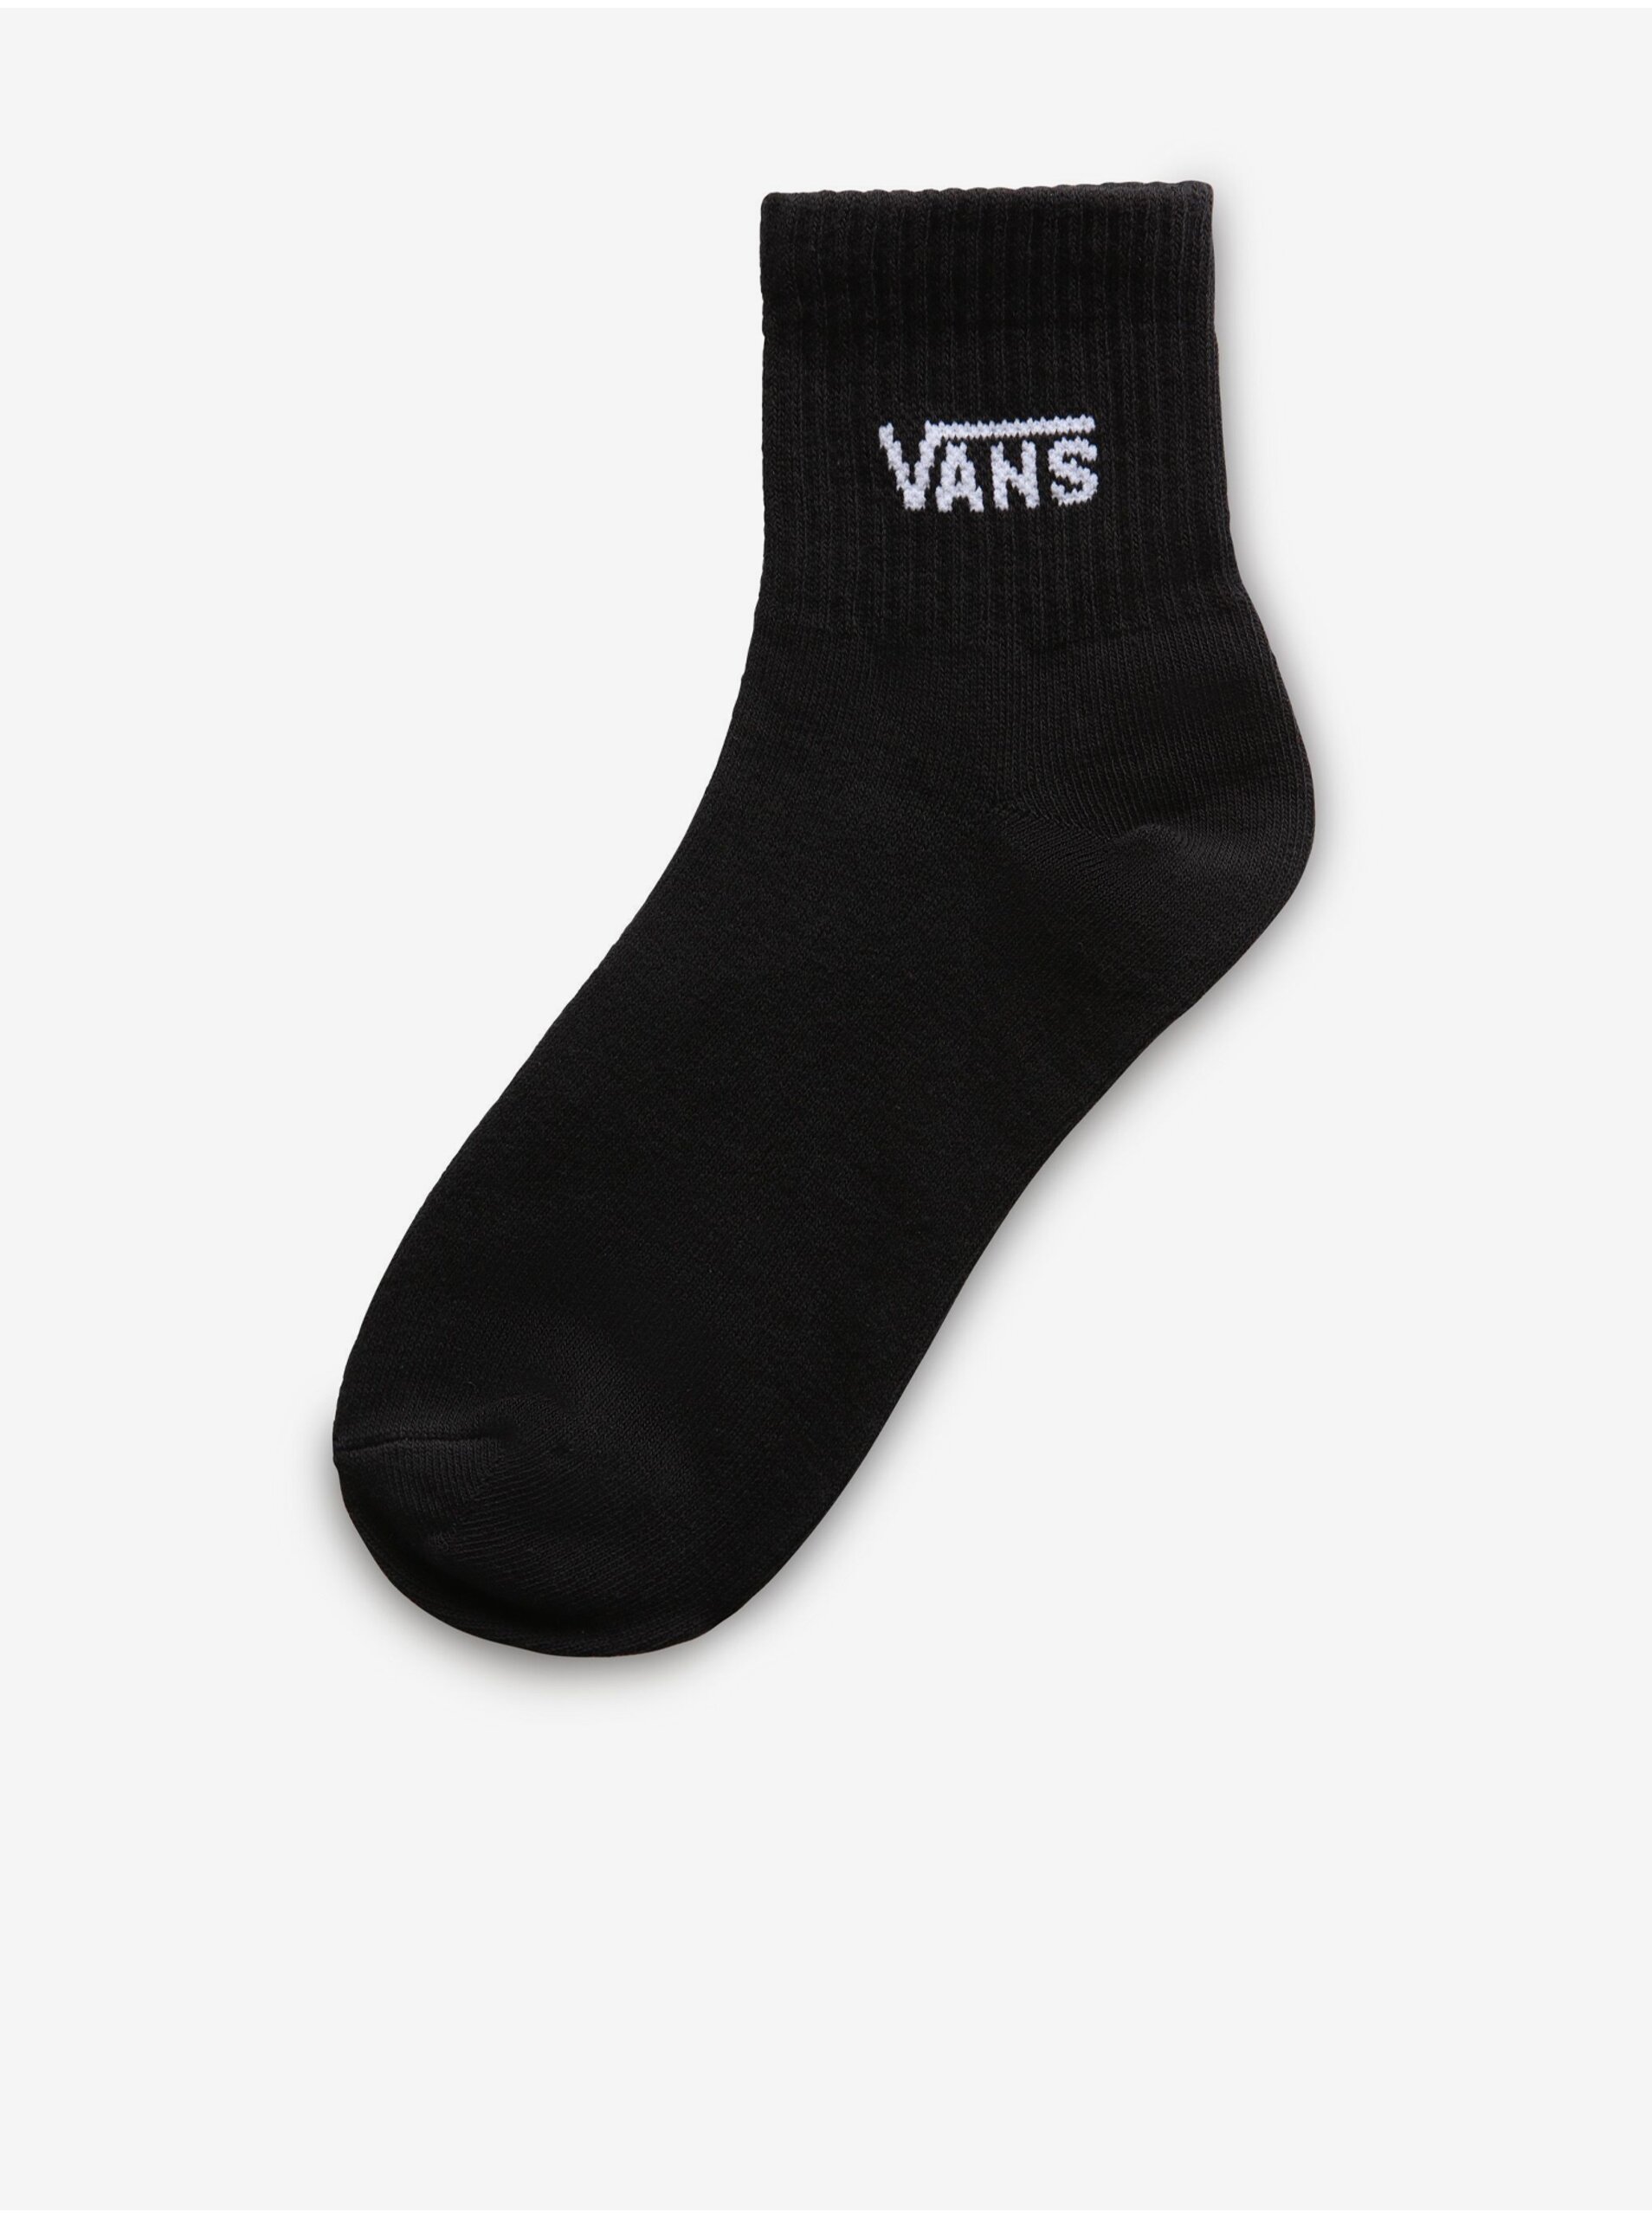 Lacno Čierne dámske ponožky VANS Half Crew